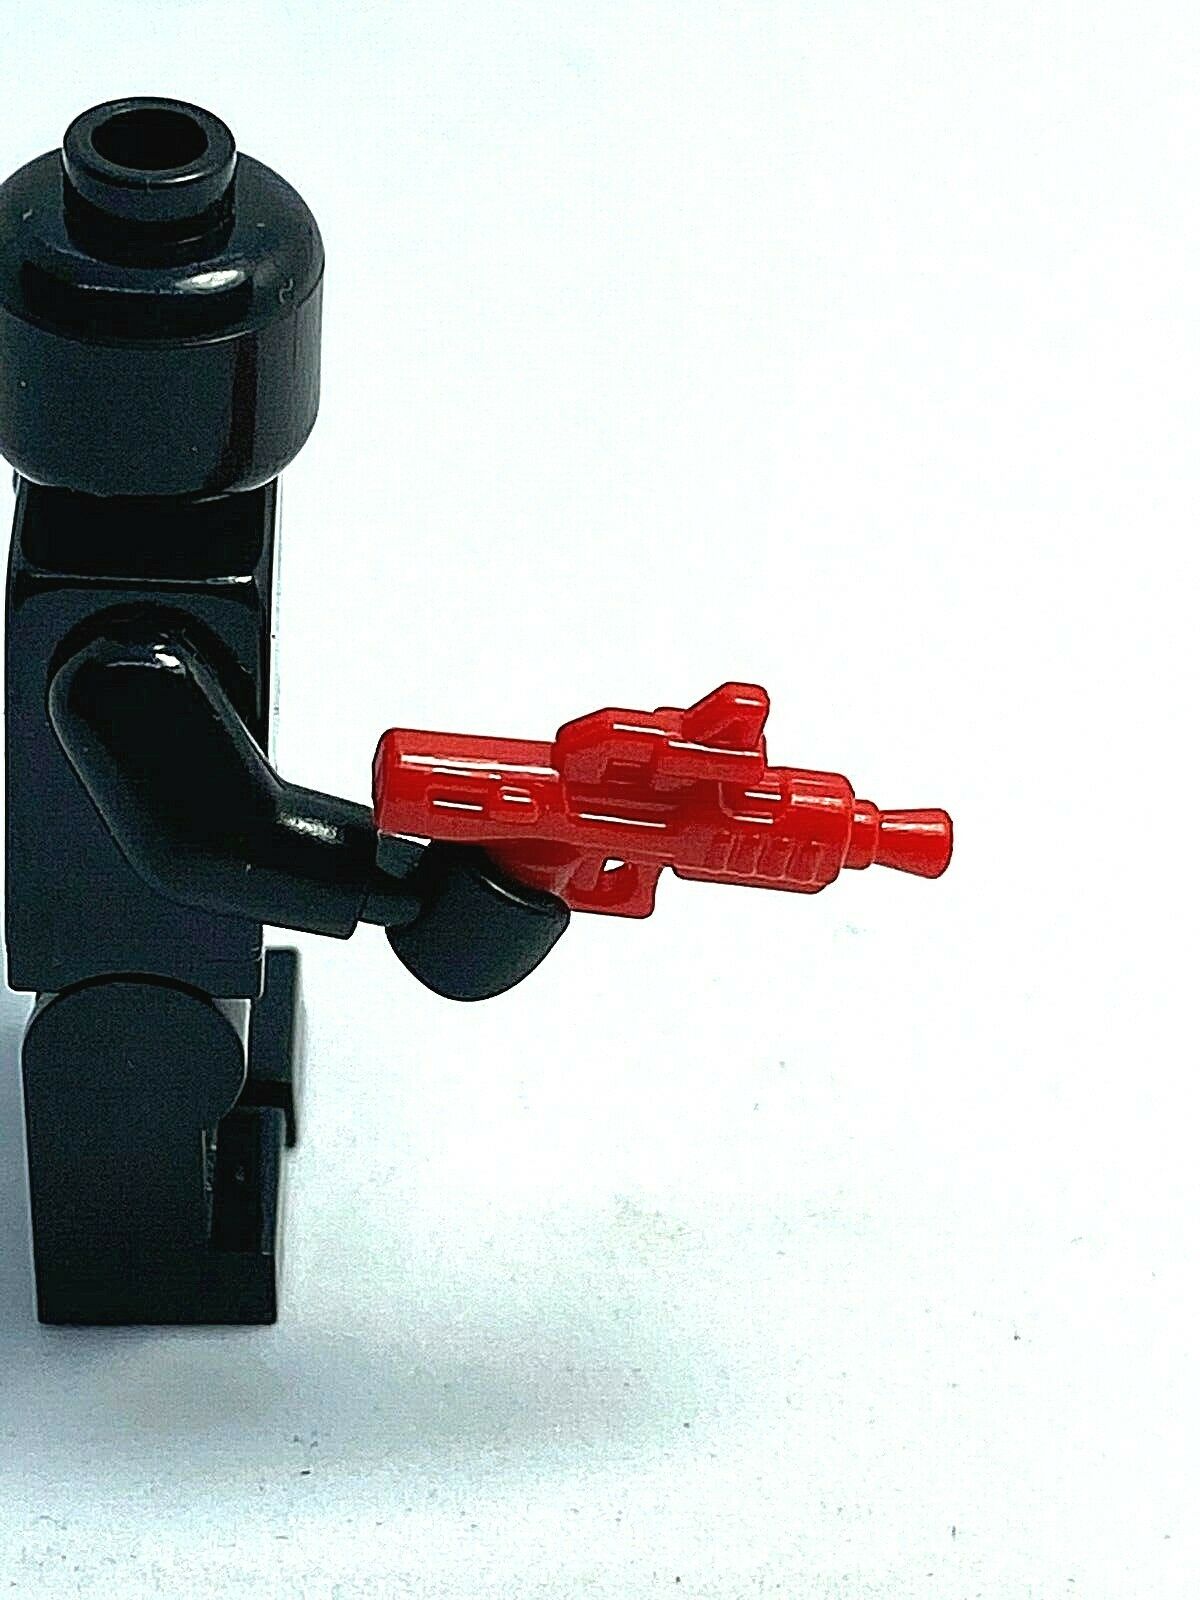 Brickarms SE-44C Blaster Pistol for Star Wars Minifigures -NEW- First Order